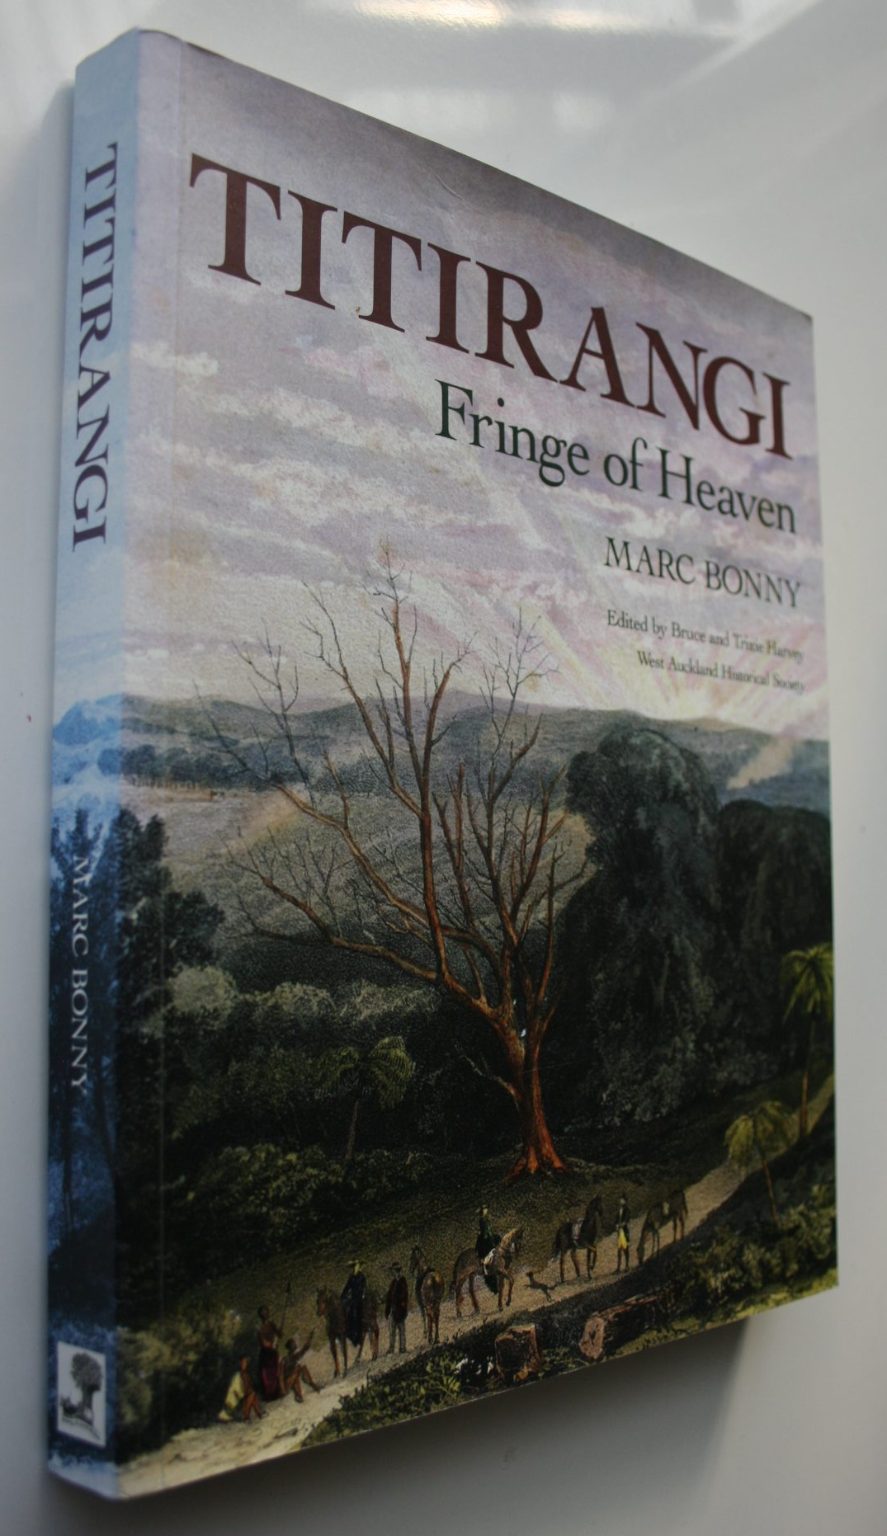 Titirangi, Fringe of Heaven By Marc Bonny, Edited by Bruce &amp; Trixie Harvey. SIGNED BY ALL 3 AUTHORS/EDS.